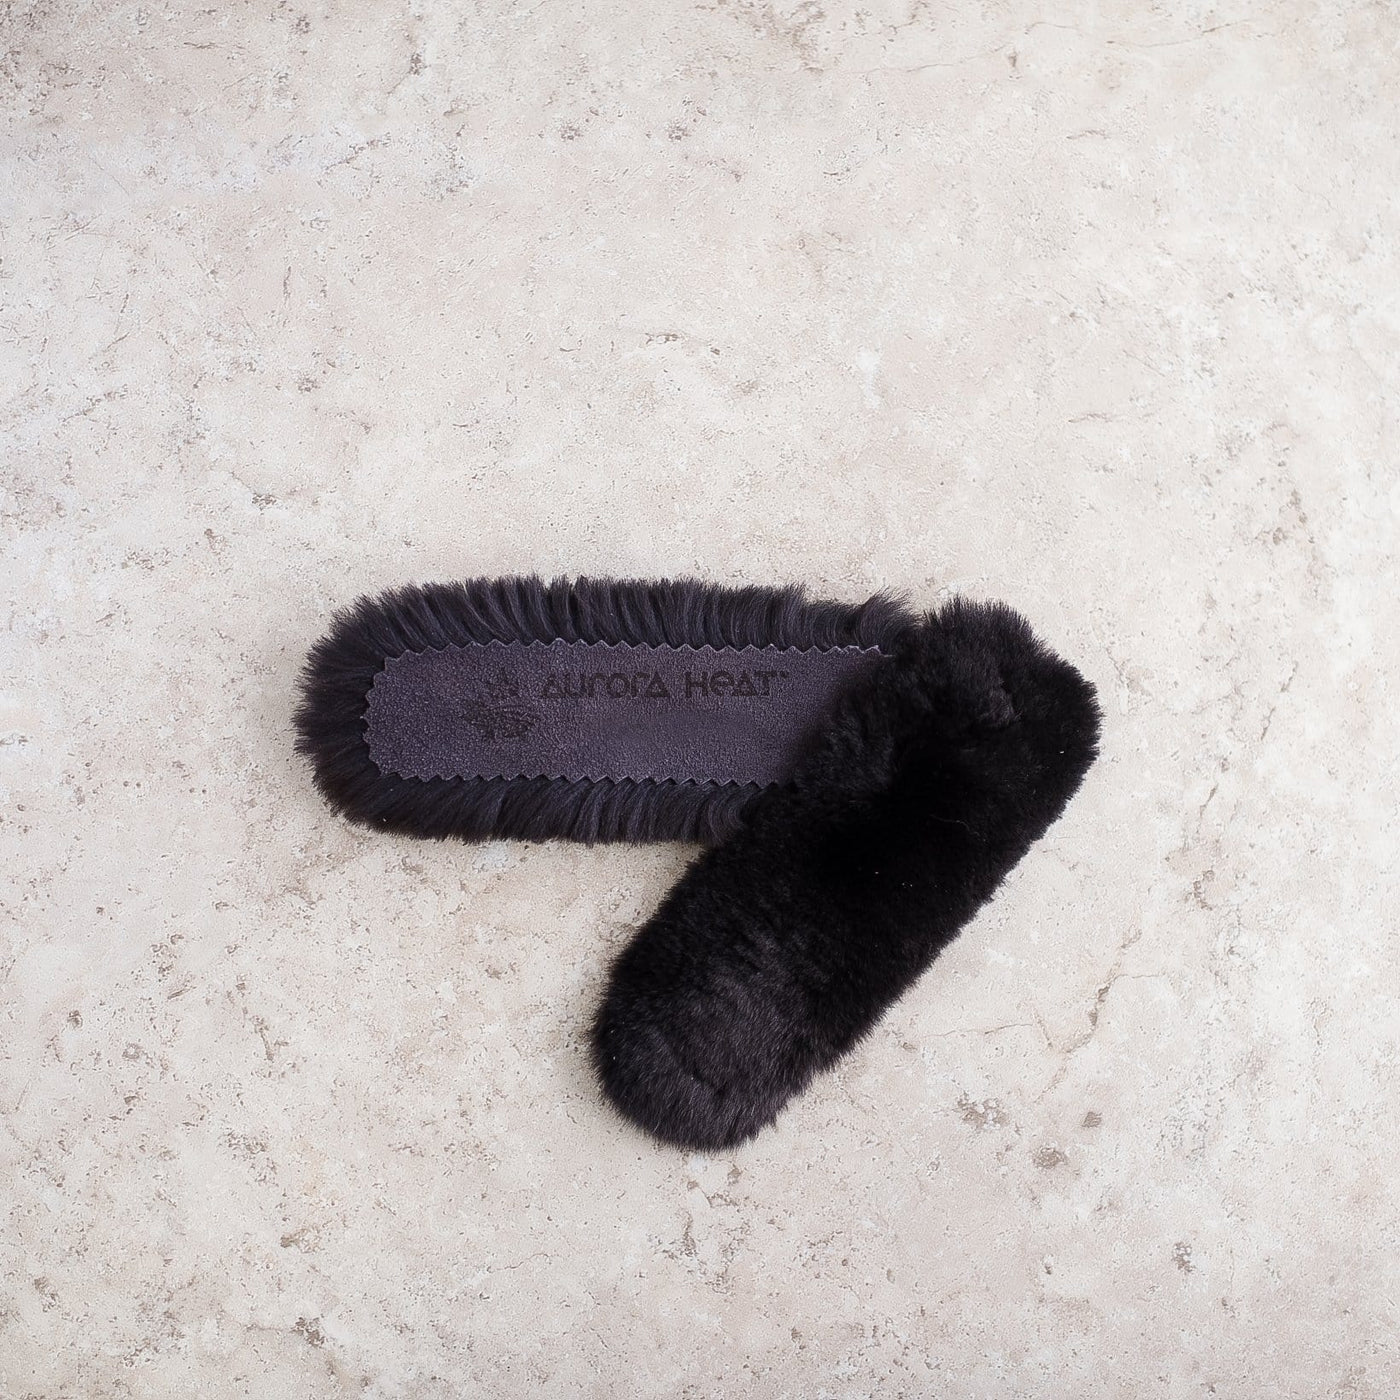 Natural Reusable Fur Black Canadian Thumb Warmers